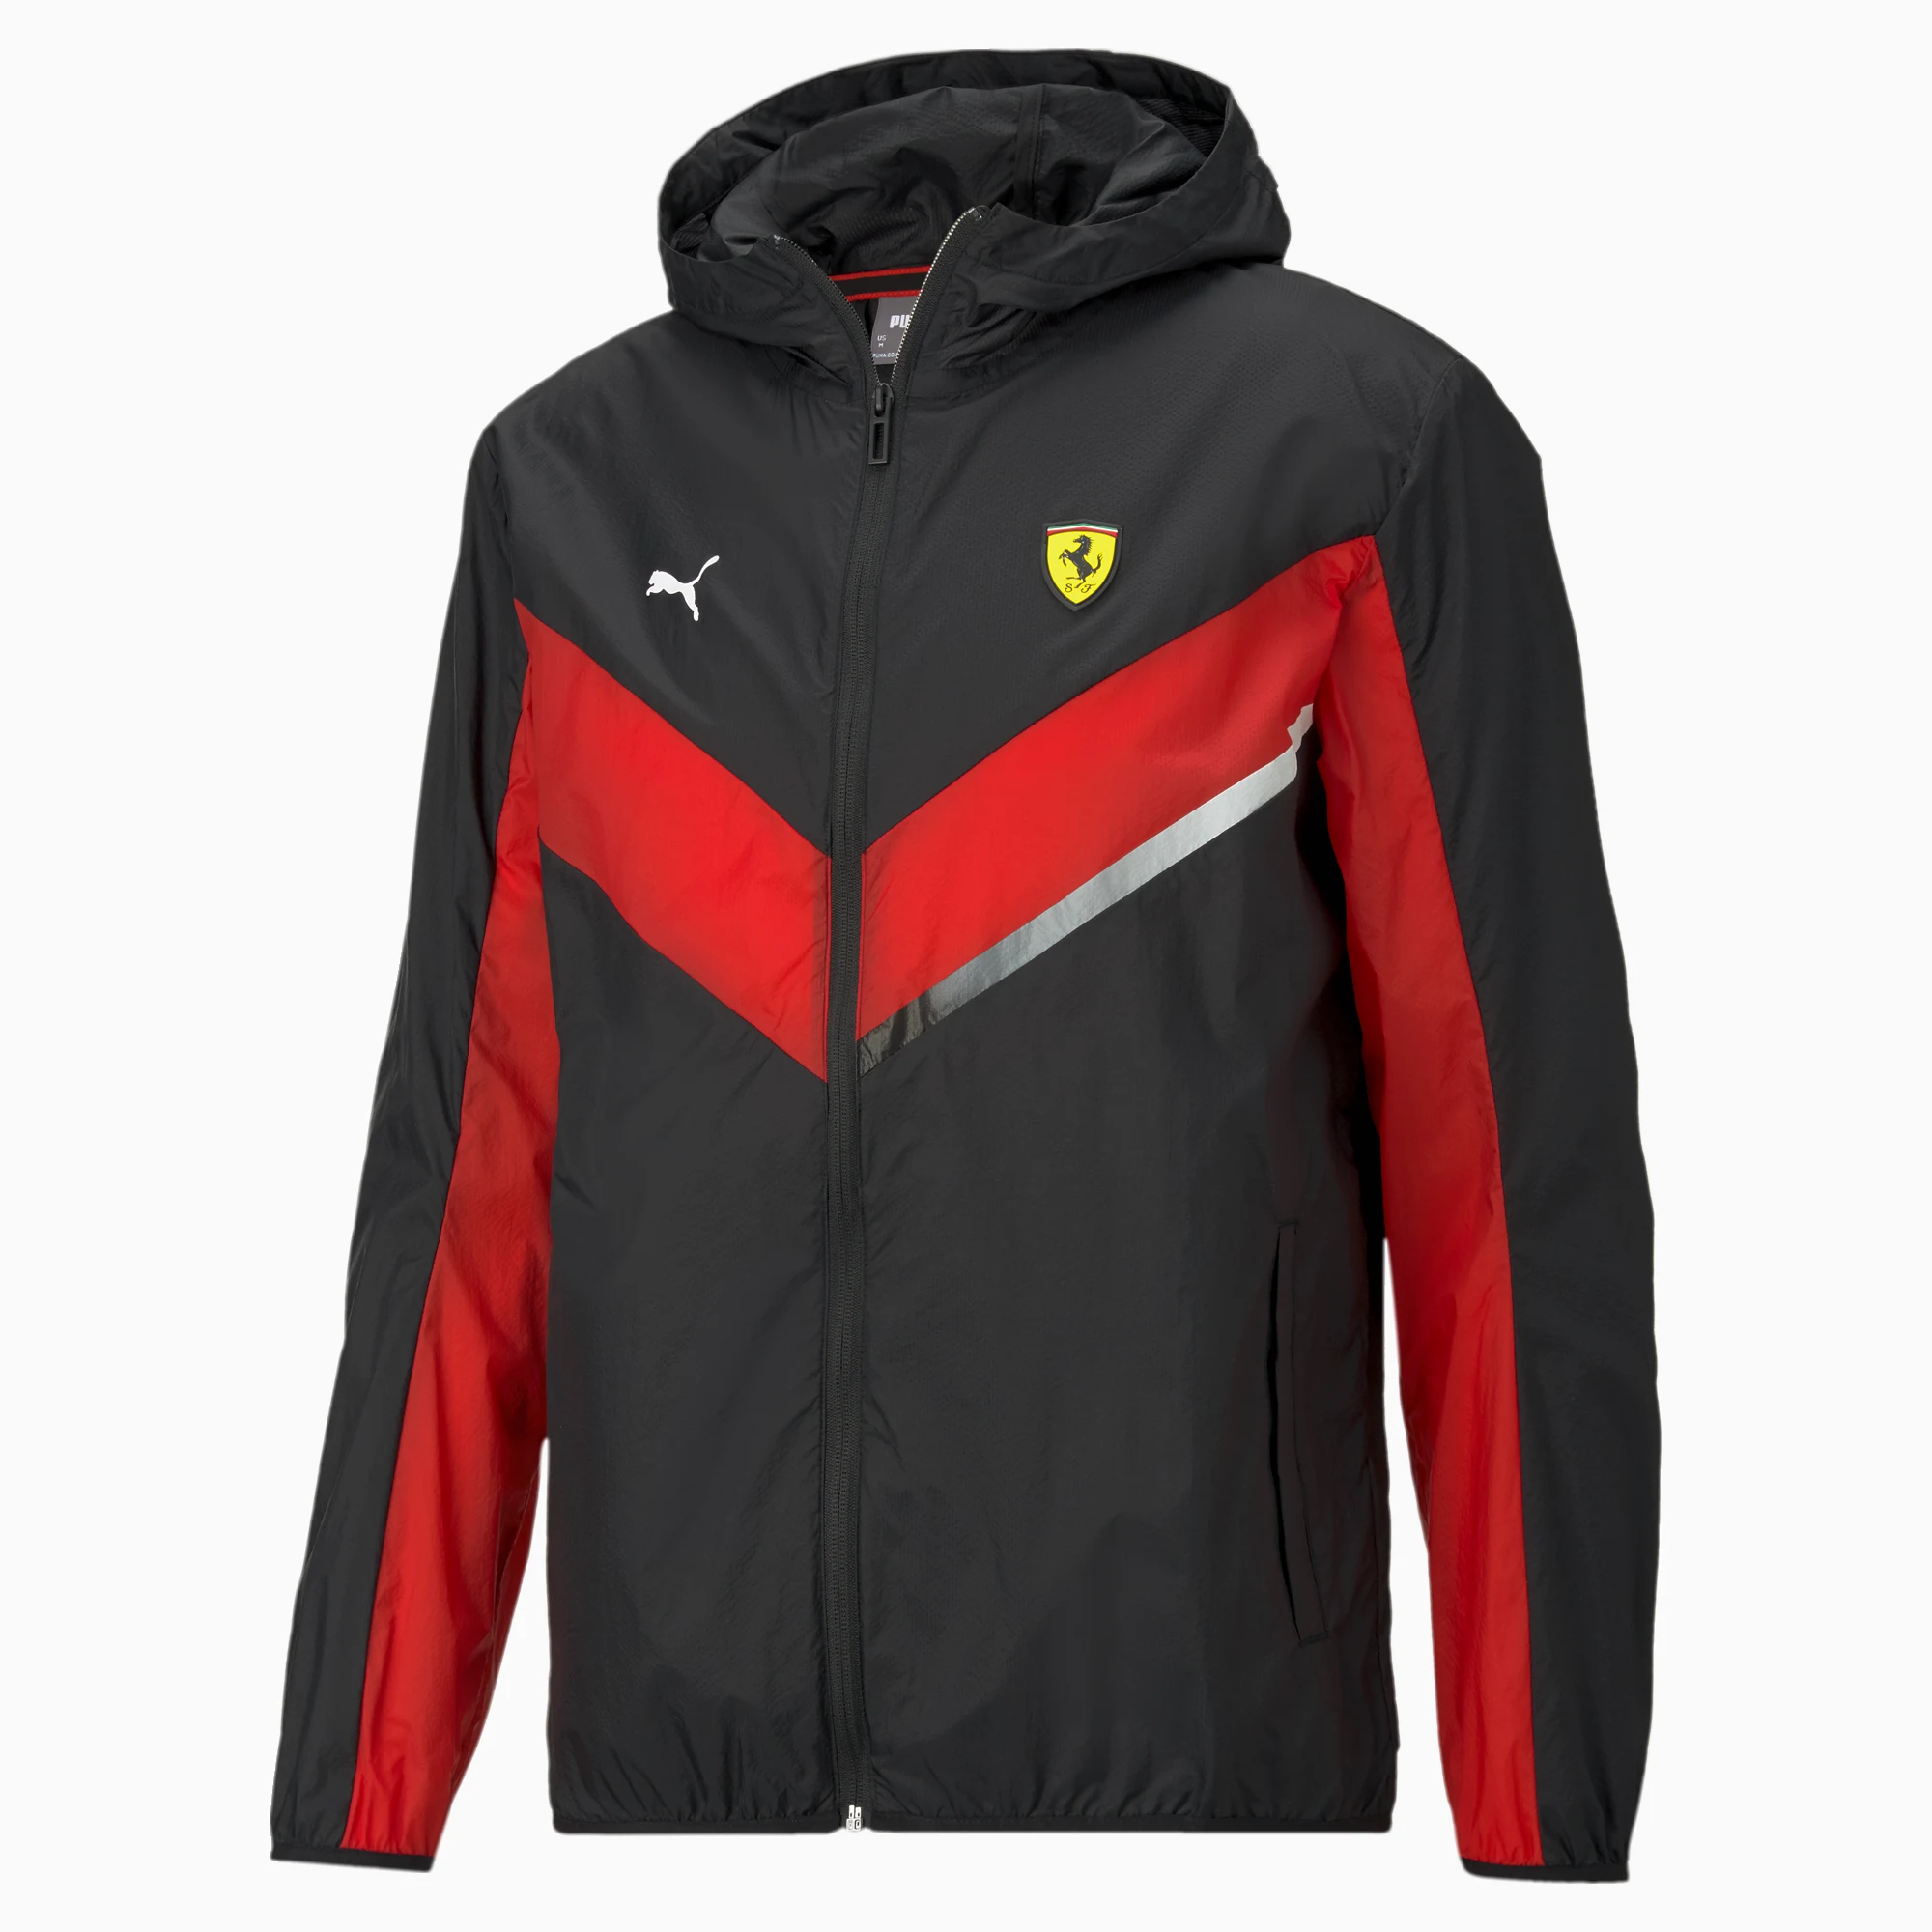 70% OFF the Ferrari x Puma Motorsport City Jacket — Sneaker Shouts